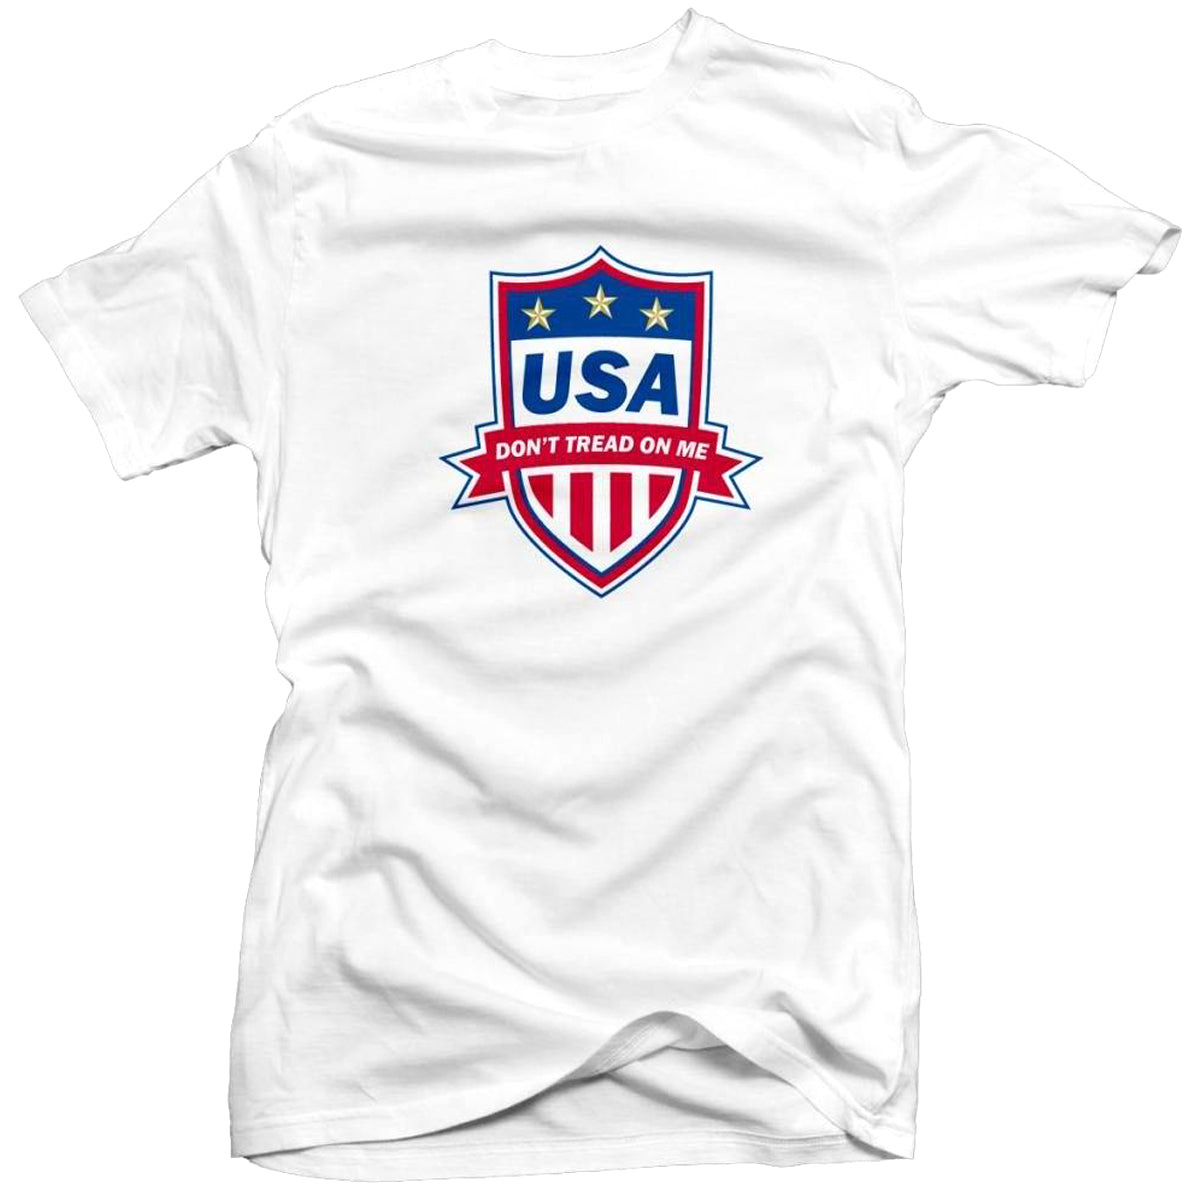 USA Don't Tread on Me Soccer Badge Printed Tee T-shirts 411 Youth Medium White 